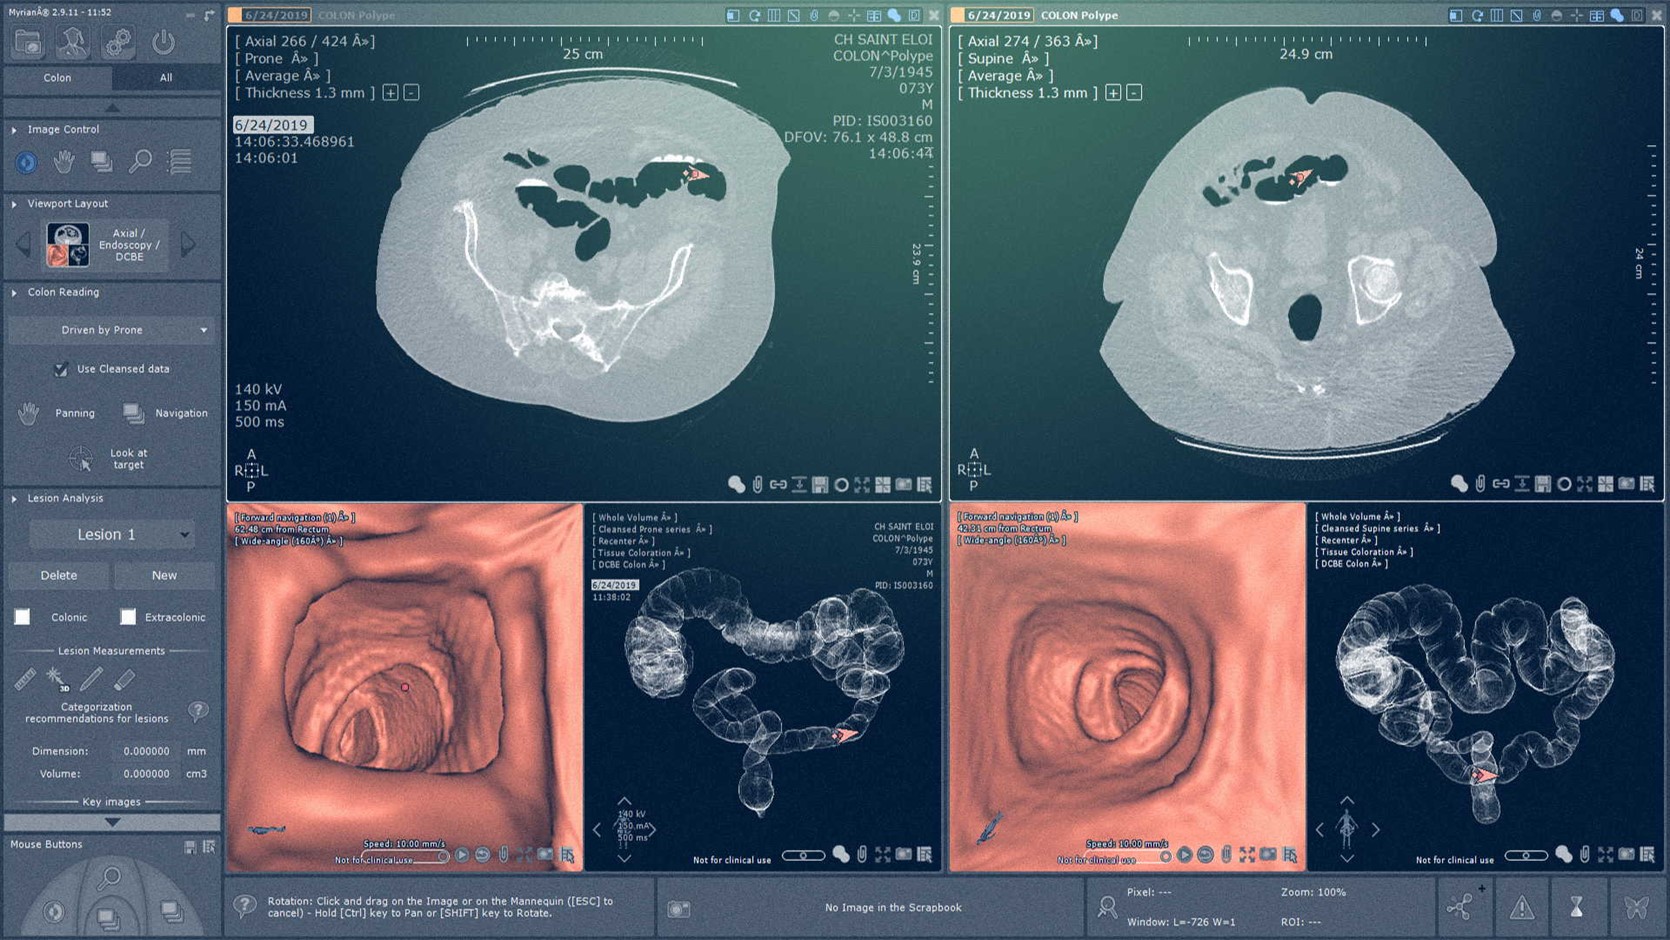 Example of virtual colonoscopy